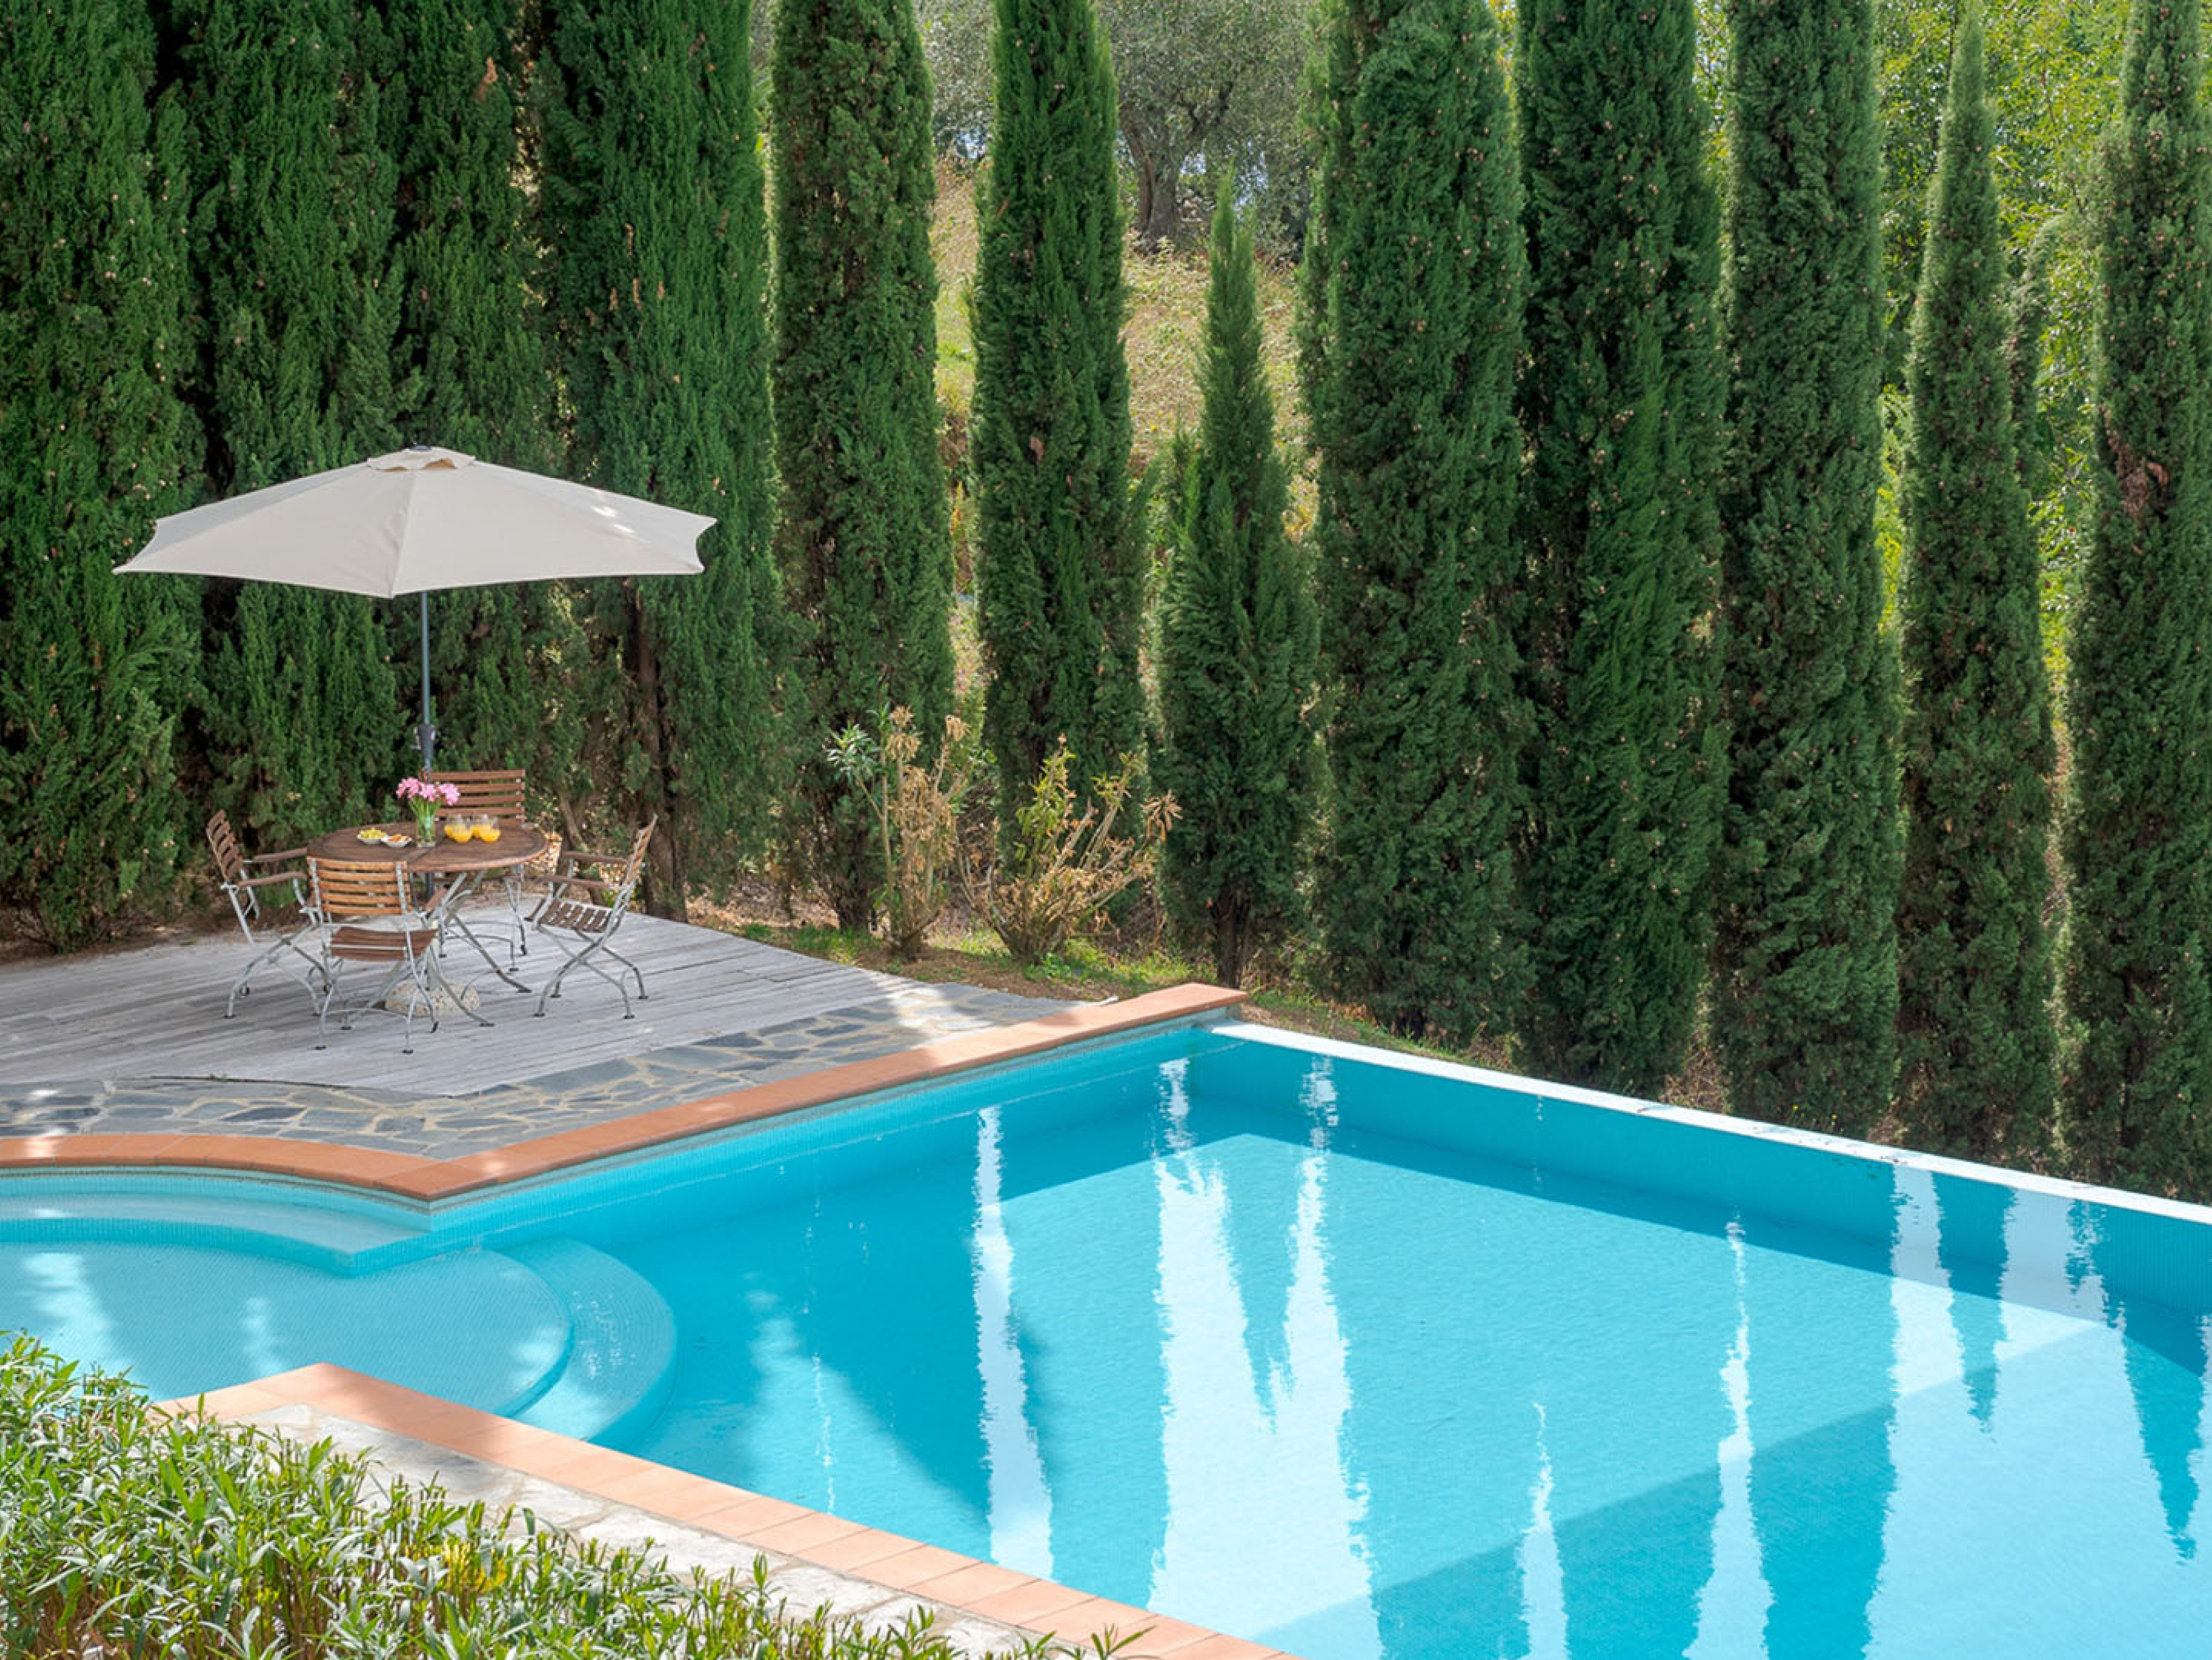 Ottopini - Pistoia vacation rentals with private pools